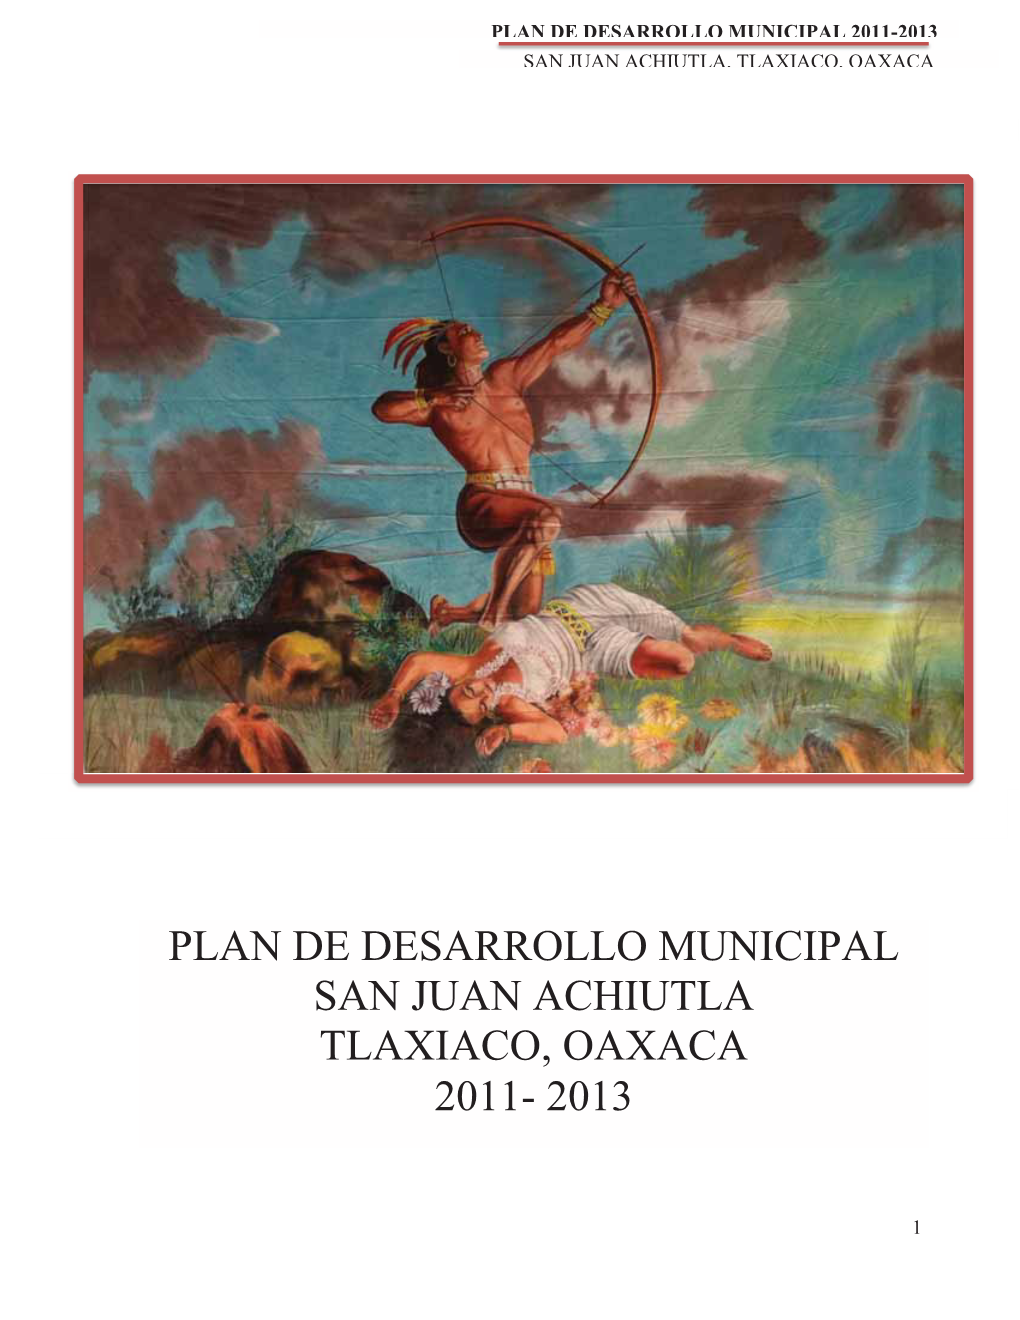 Plan De Desarrollo Municipal San Juan Achiutla Tlaxiaco, Oaxaca 2011- 2013